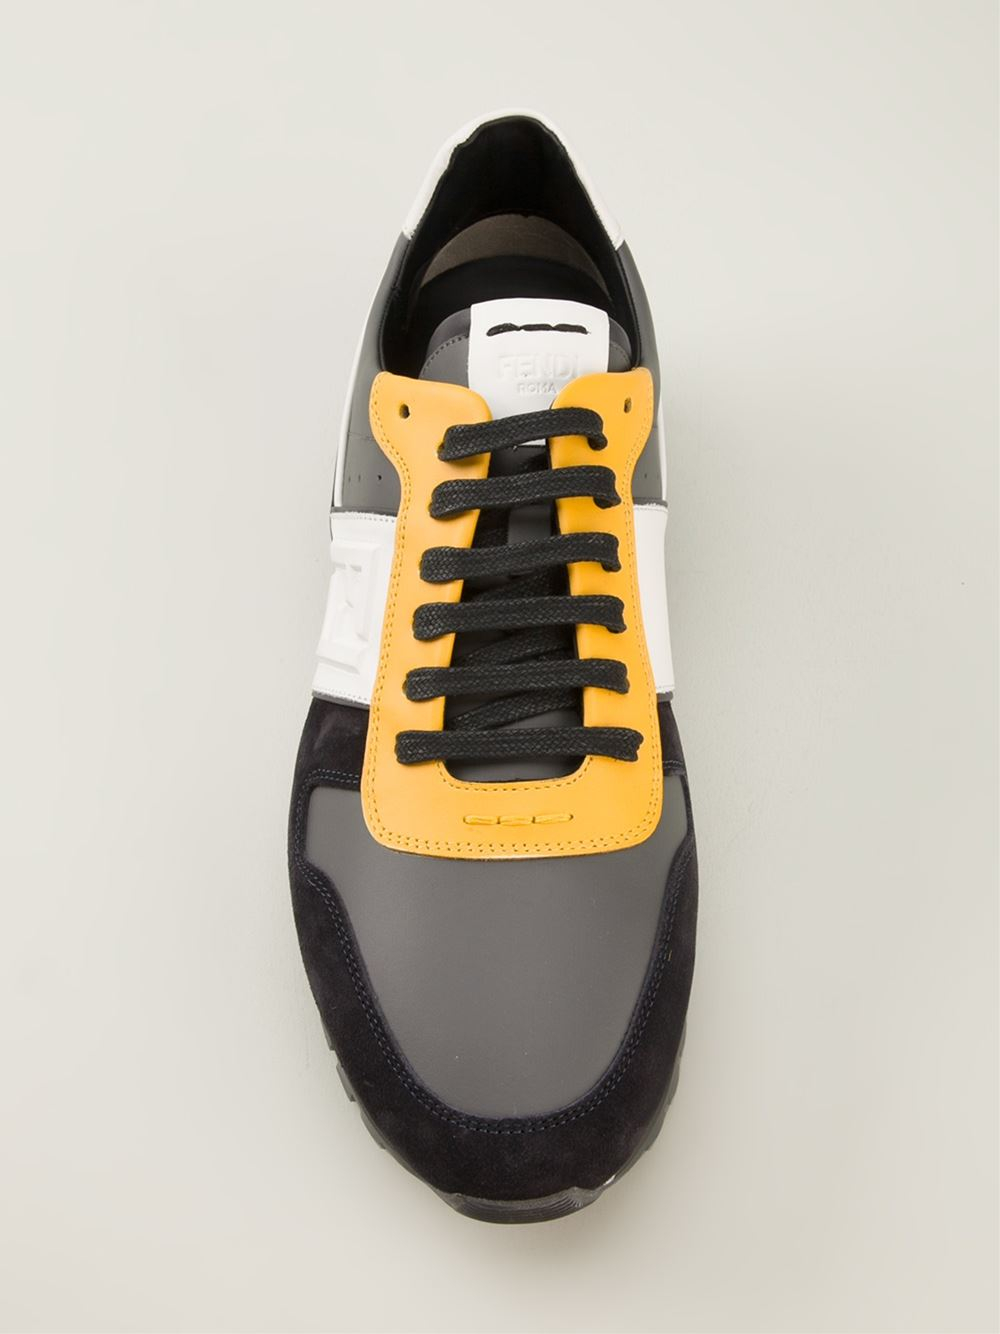 Fendi Low Sneakers in Black (Yellow) for Men - Lyst